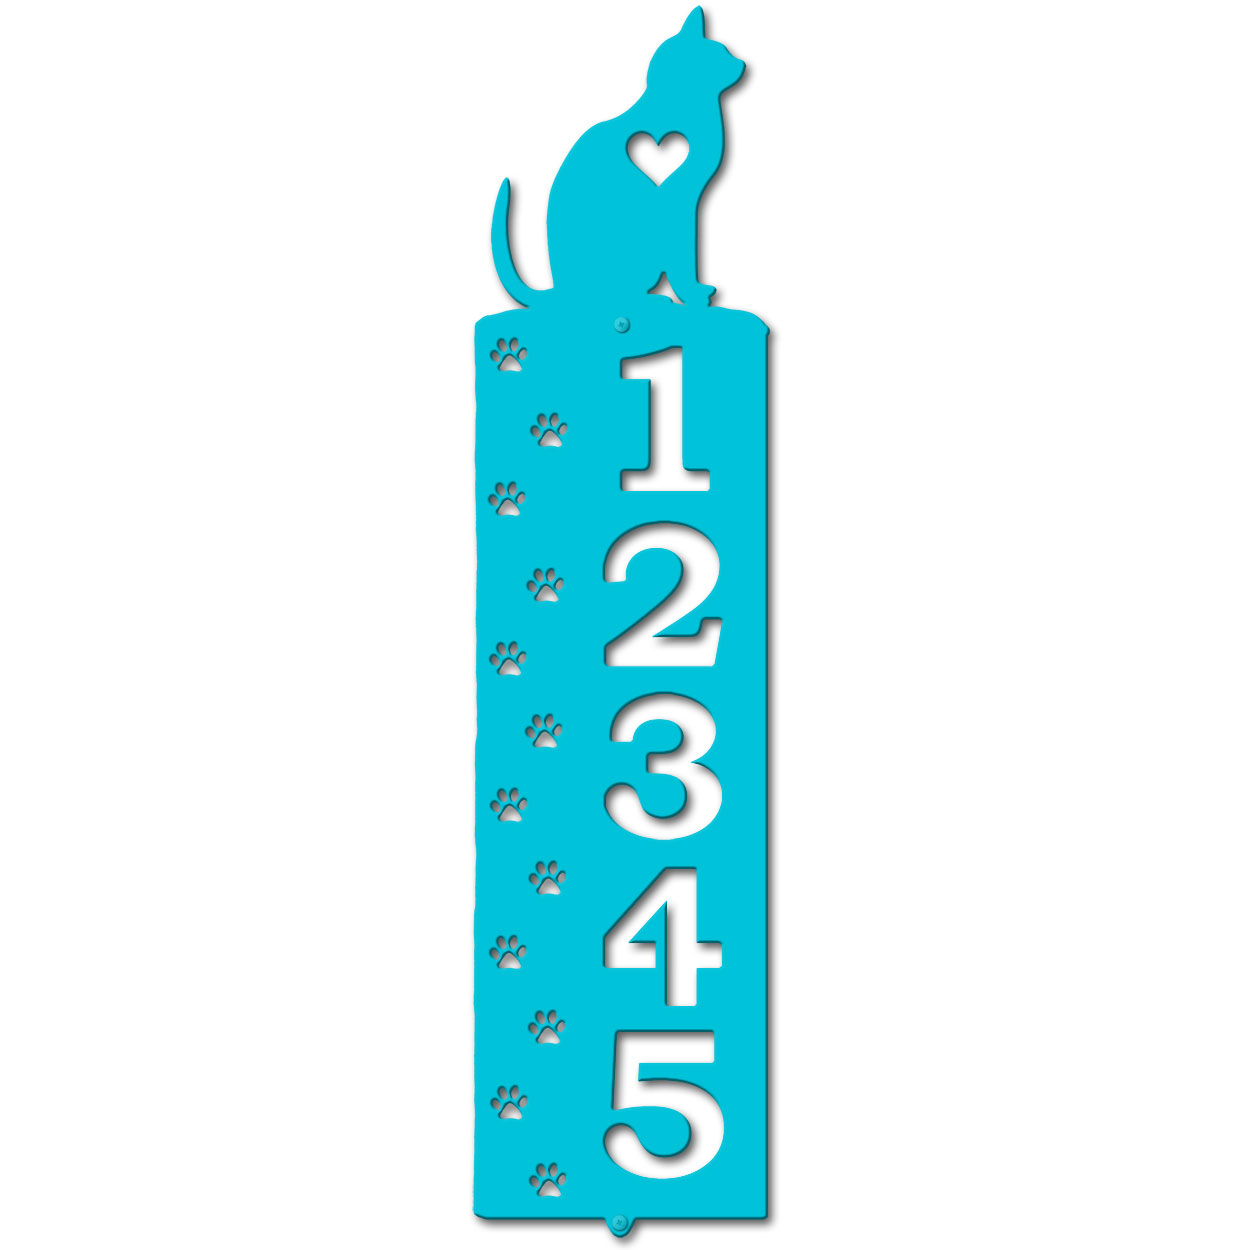 636365 - Cat Tracks Cut Outs Five Digit Address Number Plaque